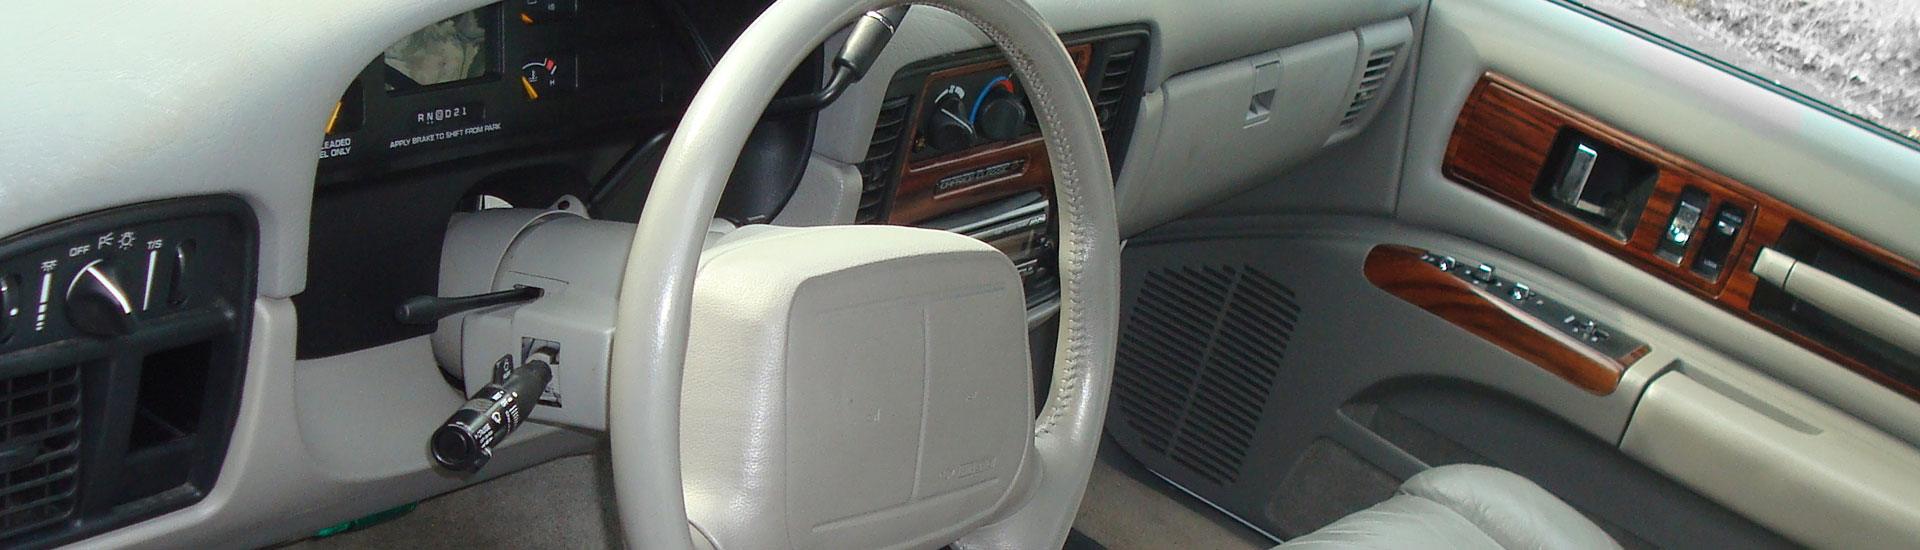 1996 Chevrolet Caprice Dash Kits